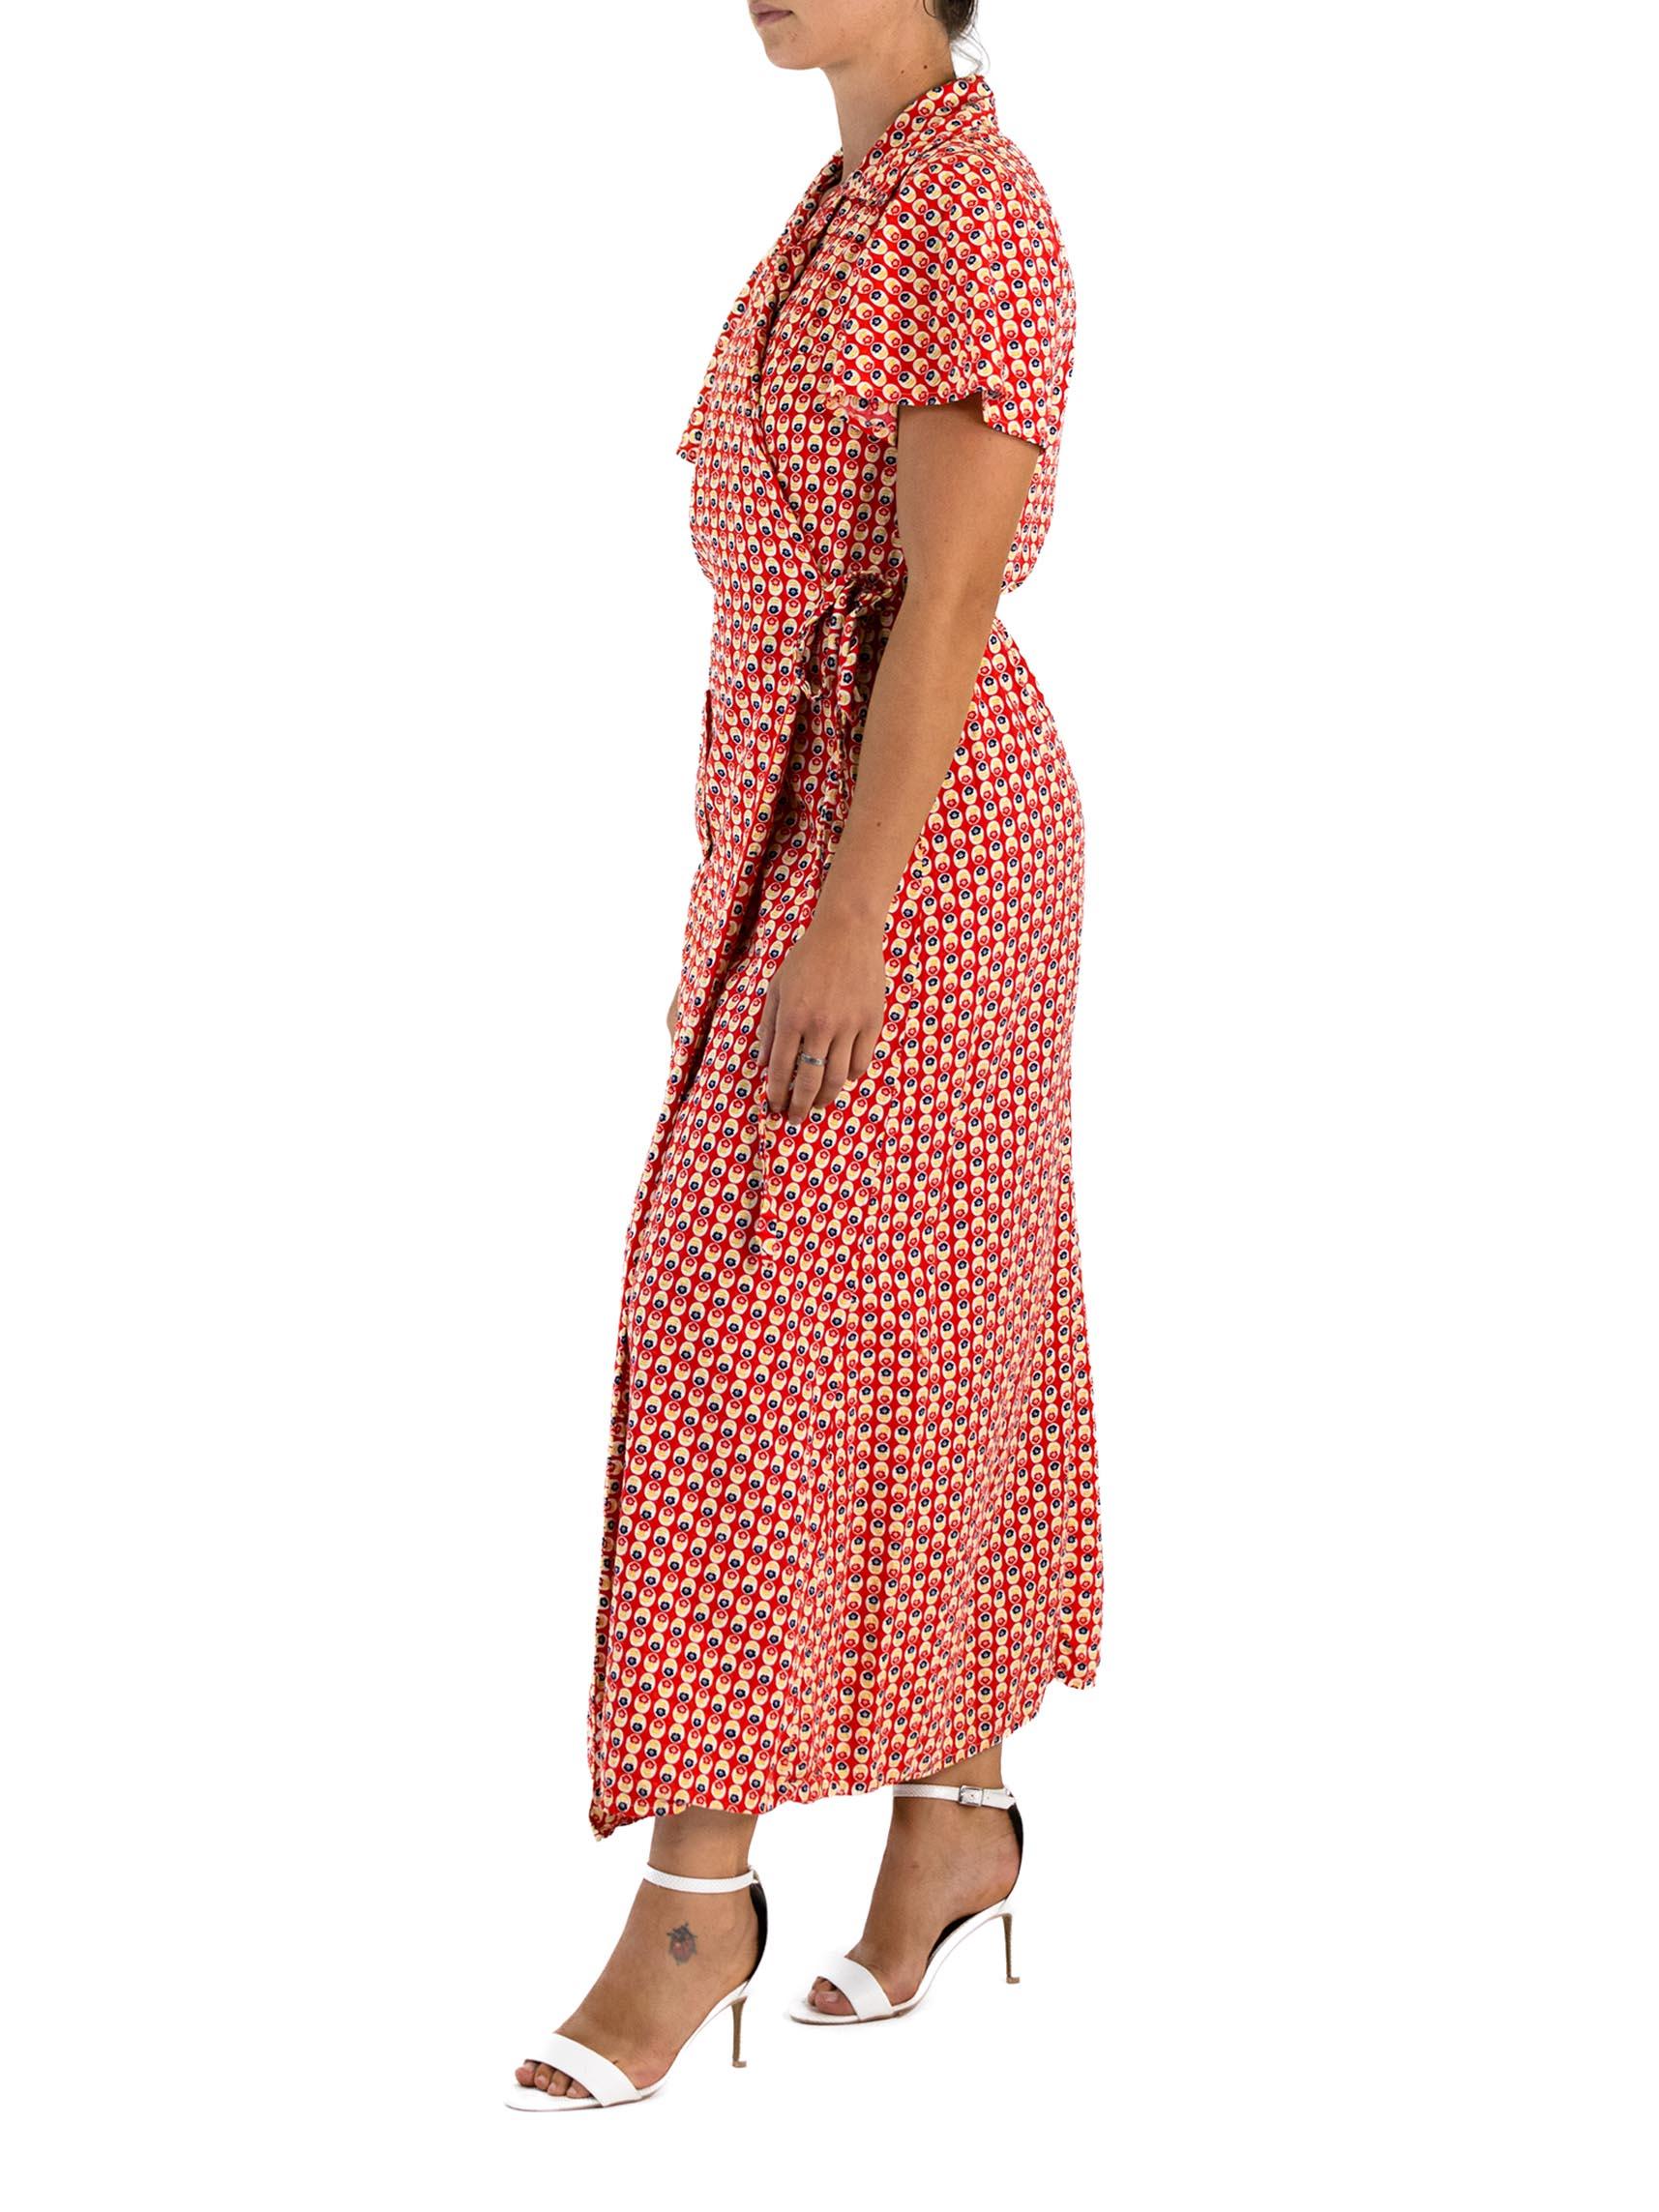 1940s house dress